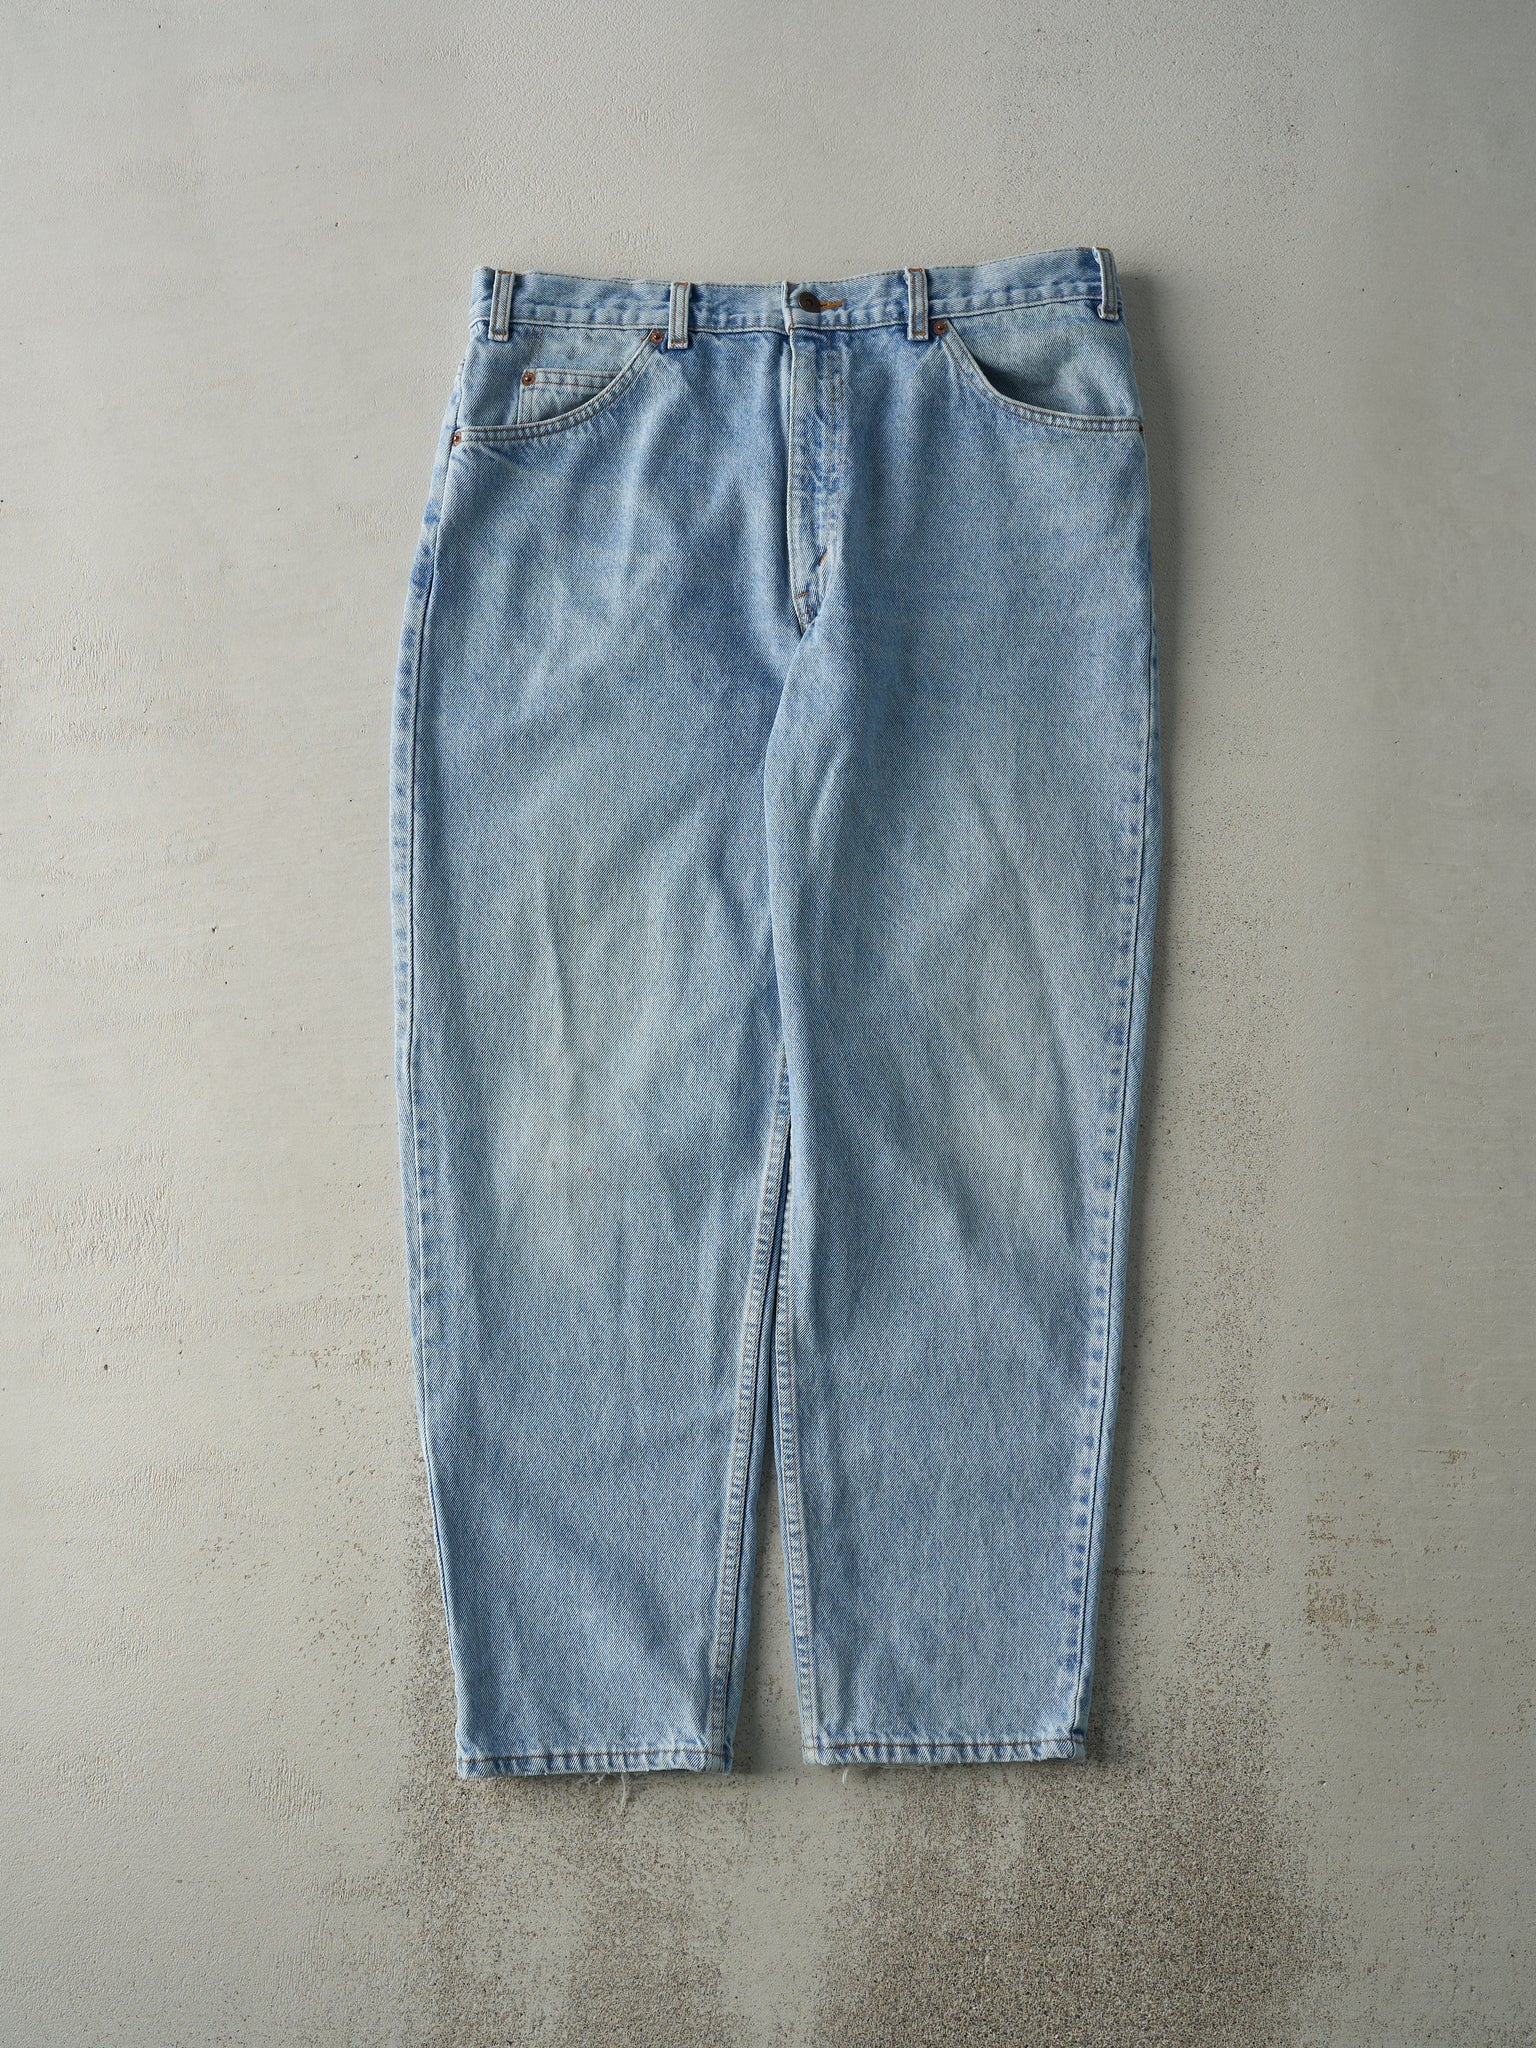 Vintage 90s Light Wash Levi's Orange Tab Jeans (36x30)